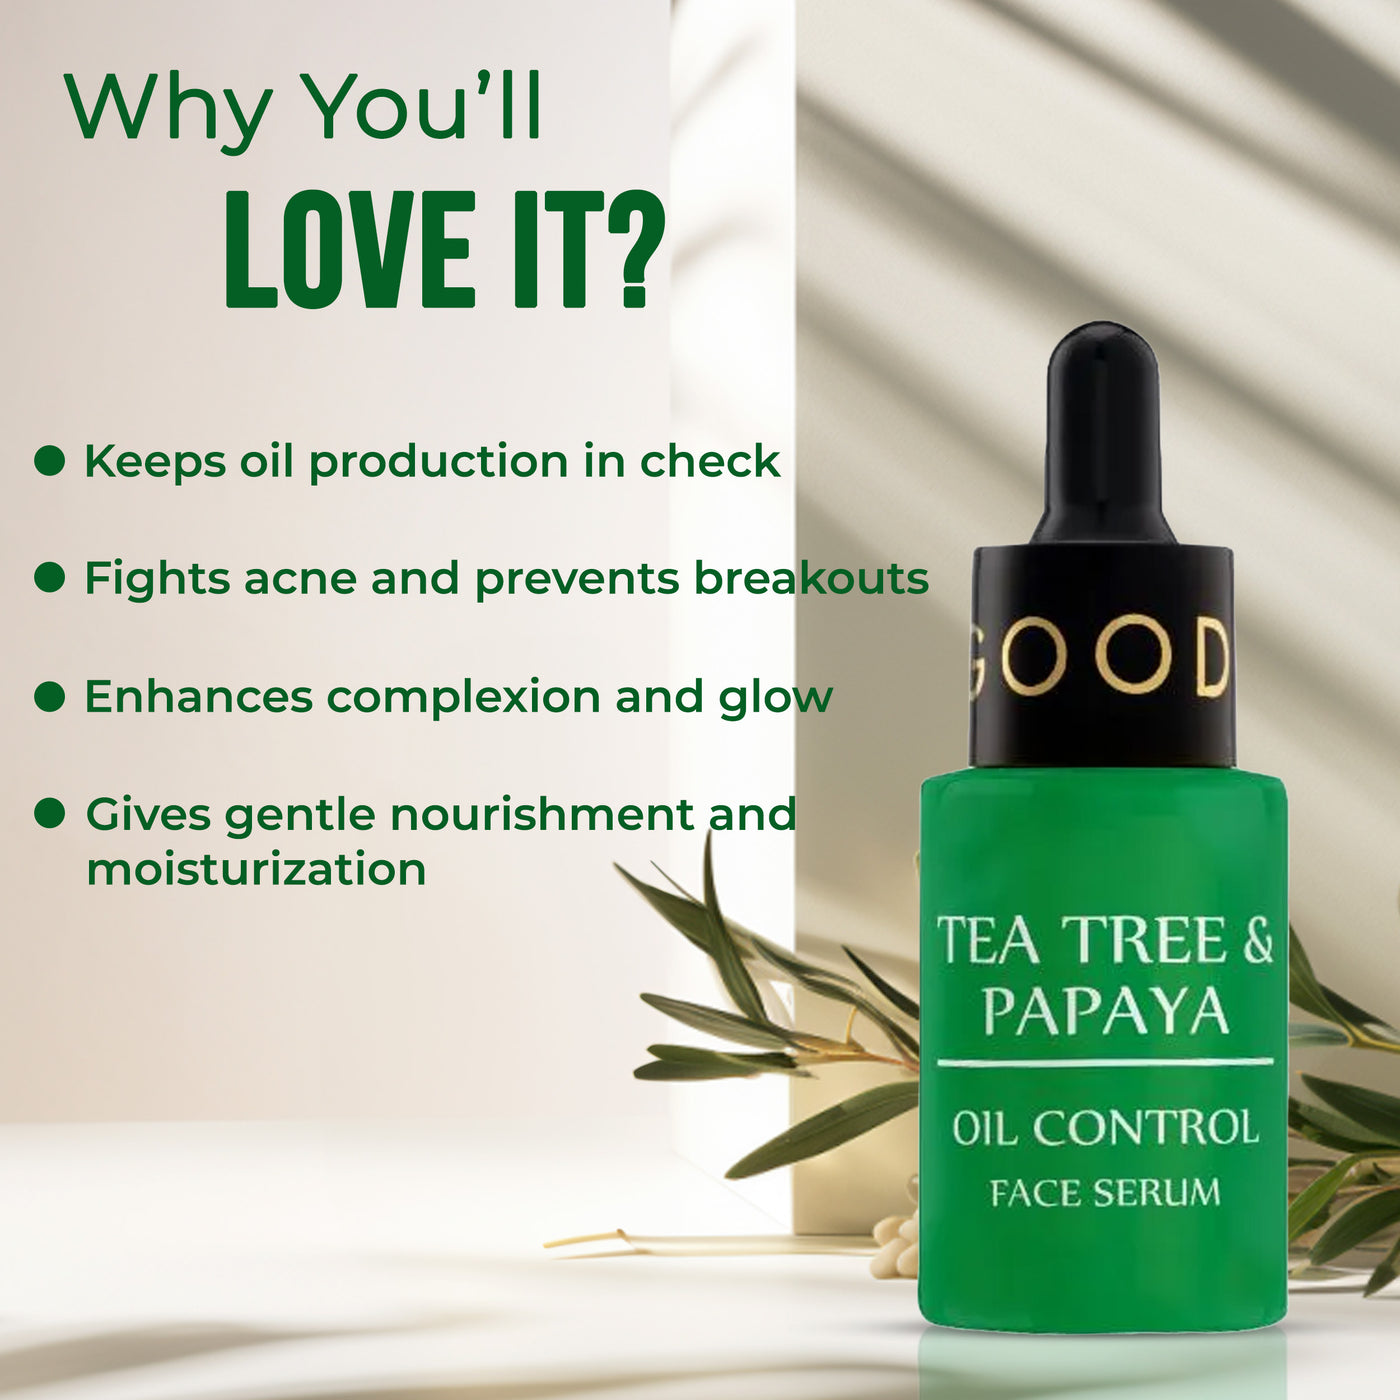 Oil Control Tea Tree & Papaya Face Serum 30ml